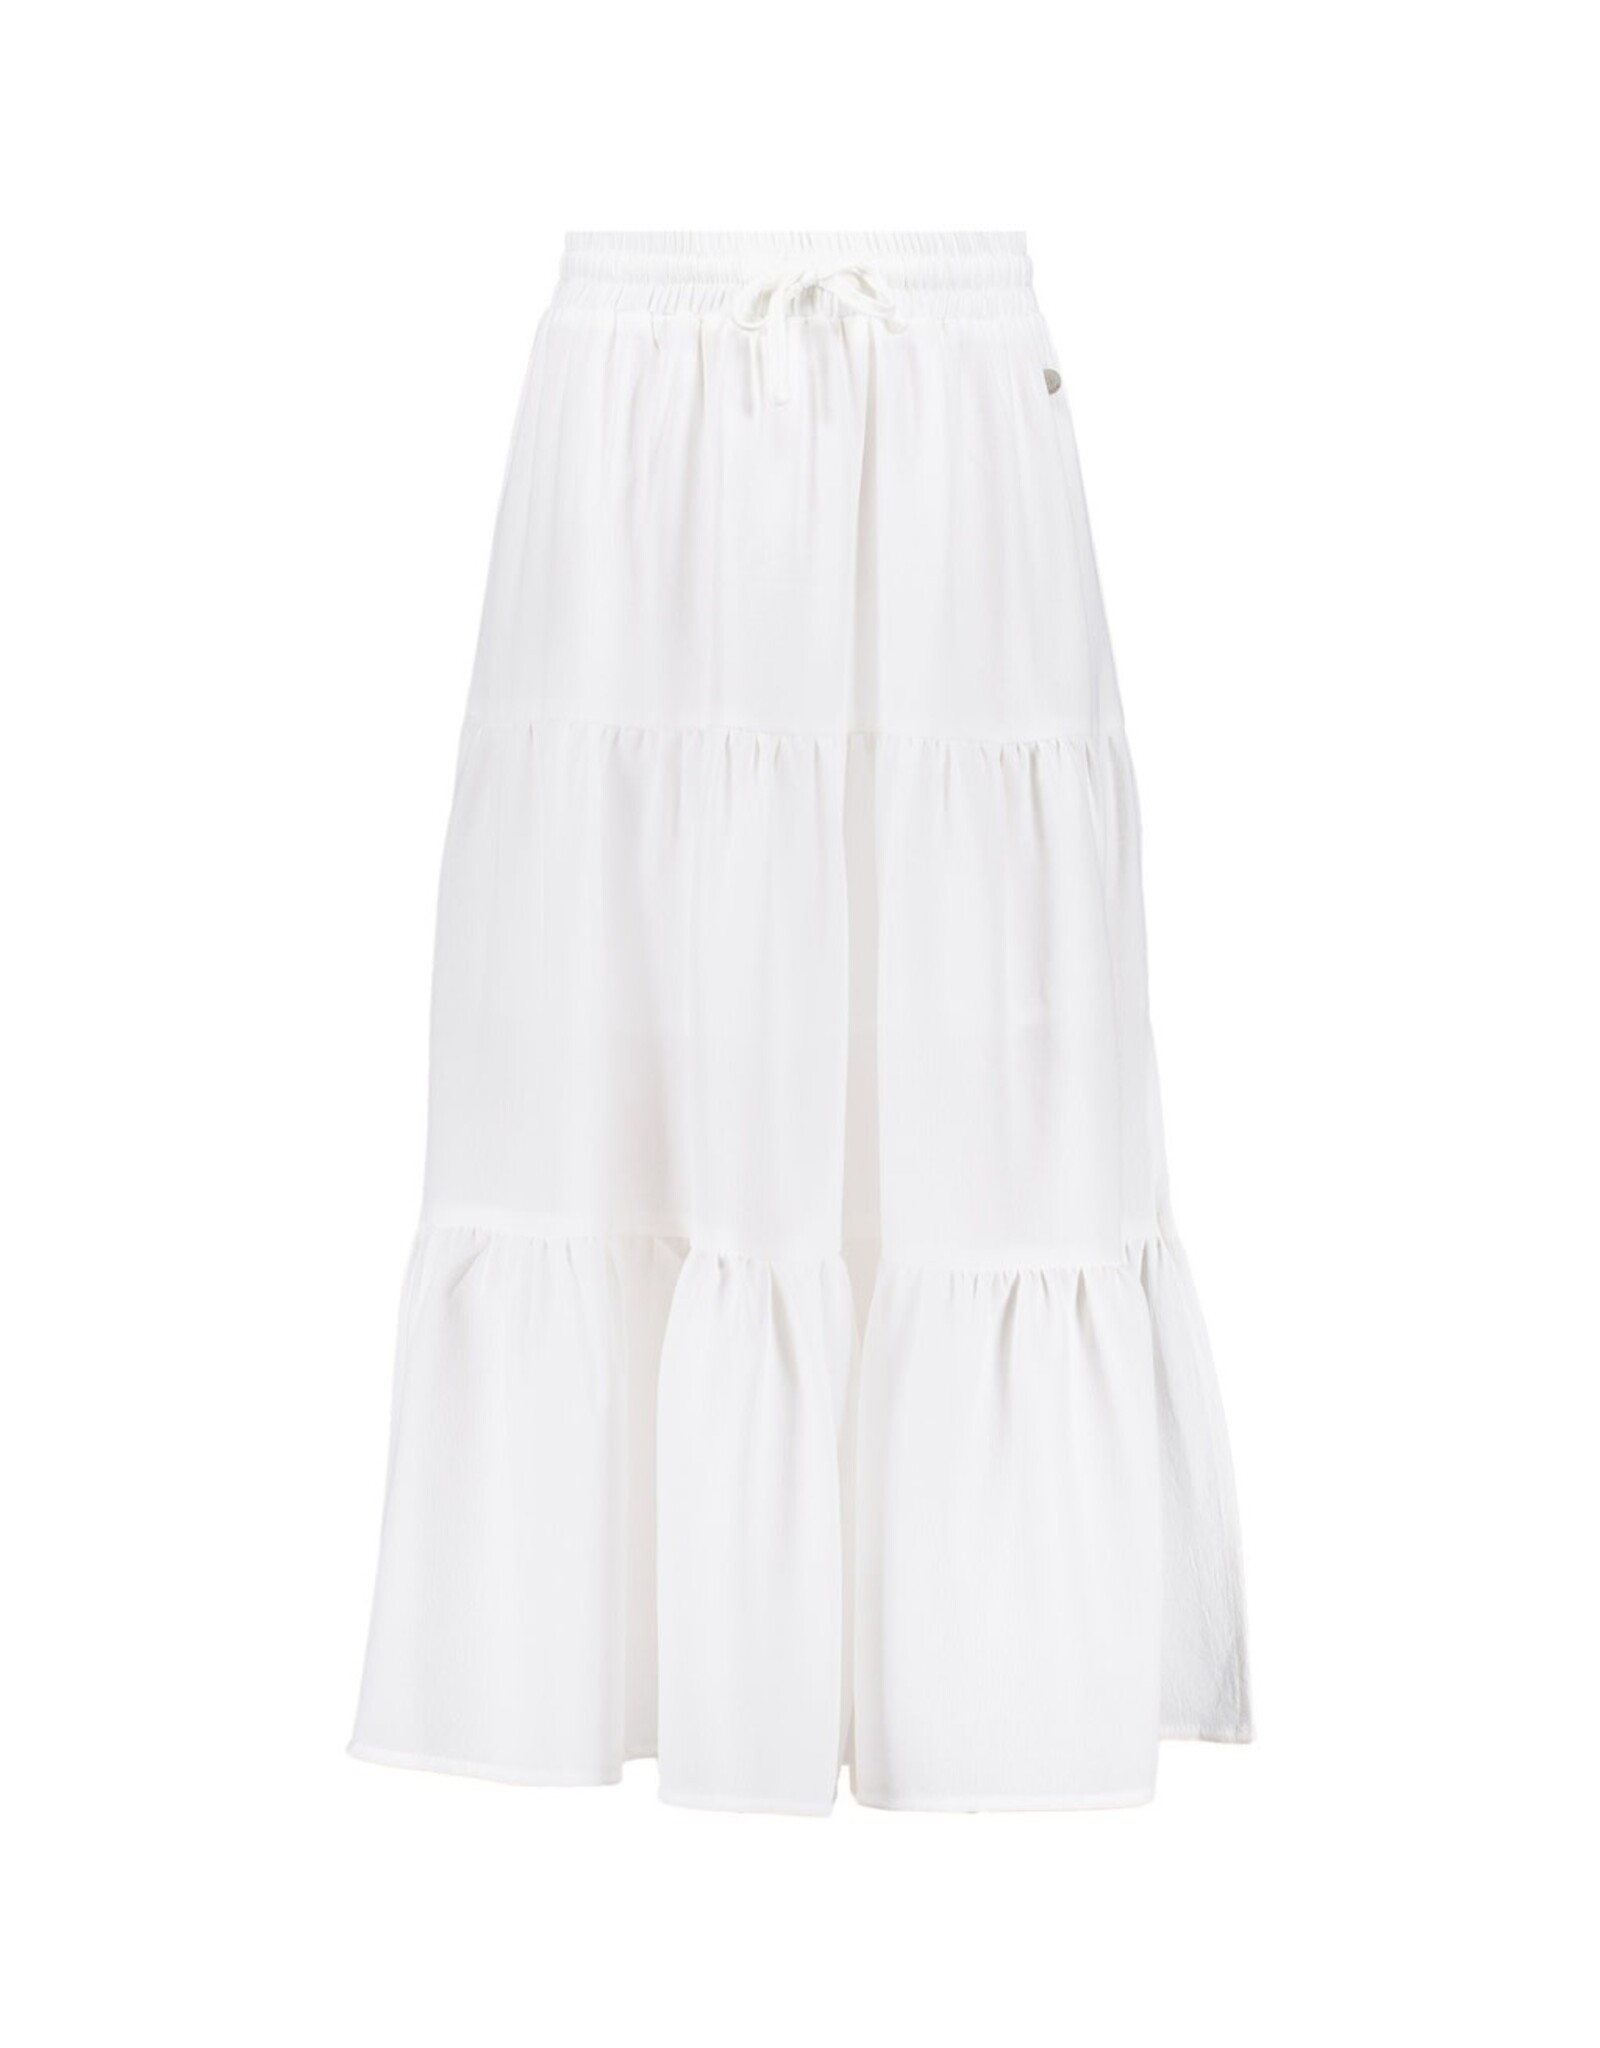 FRANKIE&LIBERTY Niki Midi Skirt BRIGHT WHITE